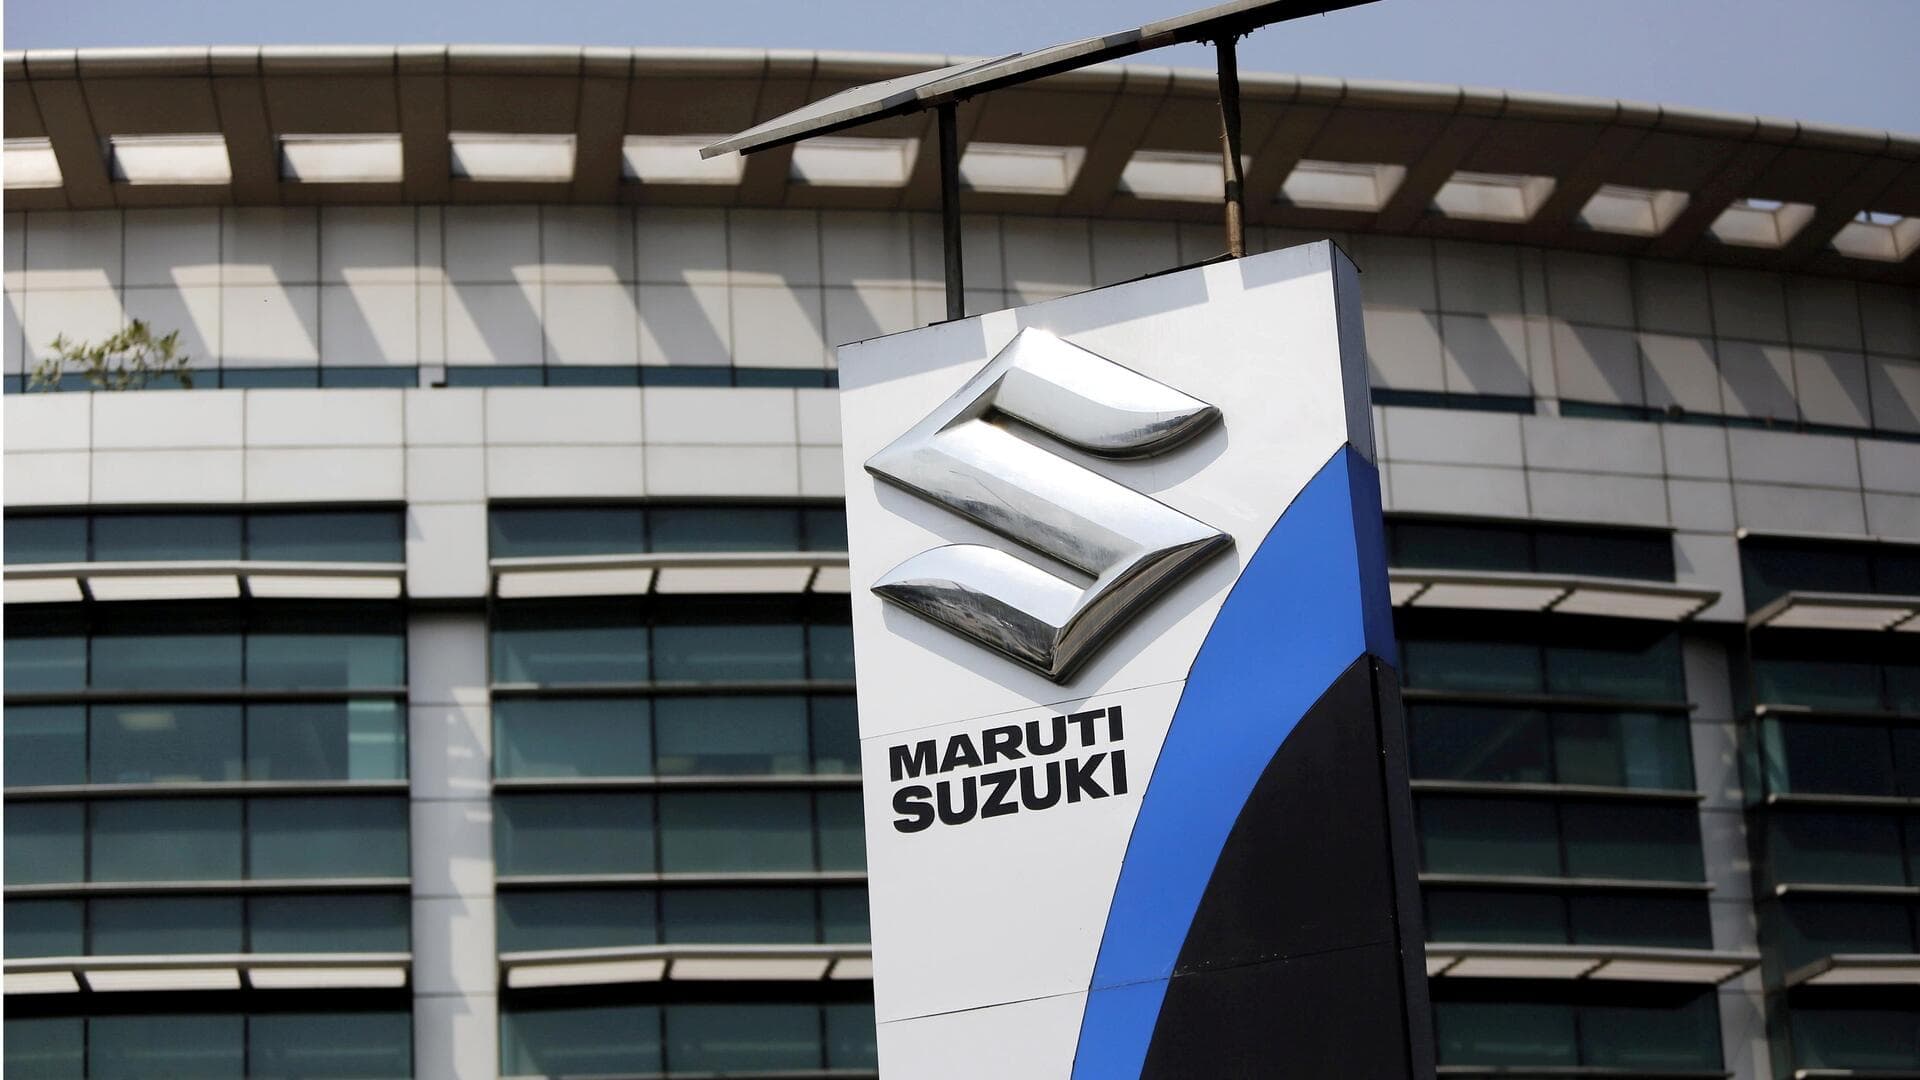 Maruti Suzuki's Q2 results show 80% YoY net profit growth